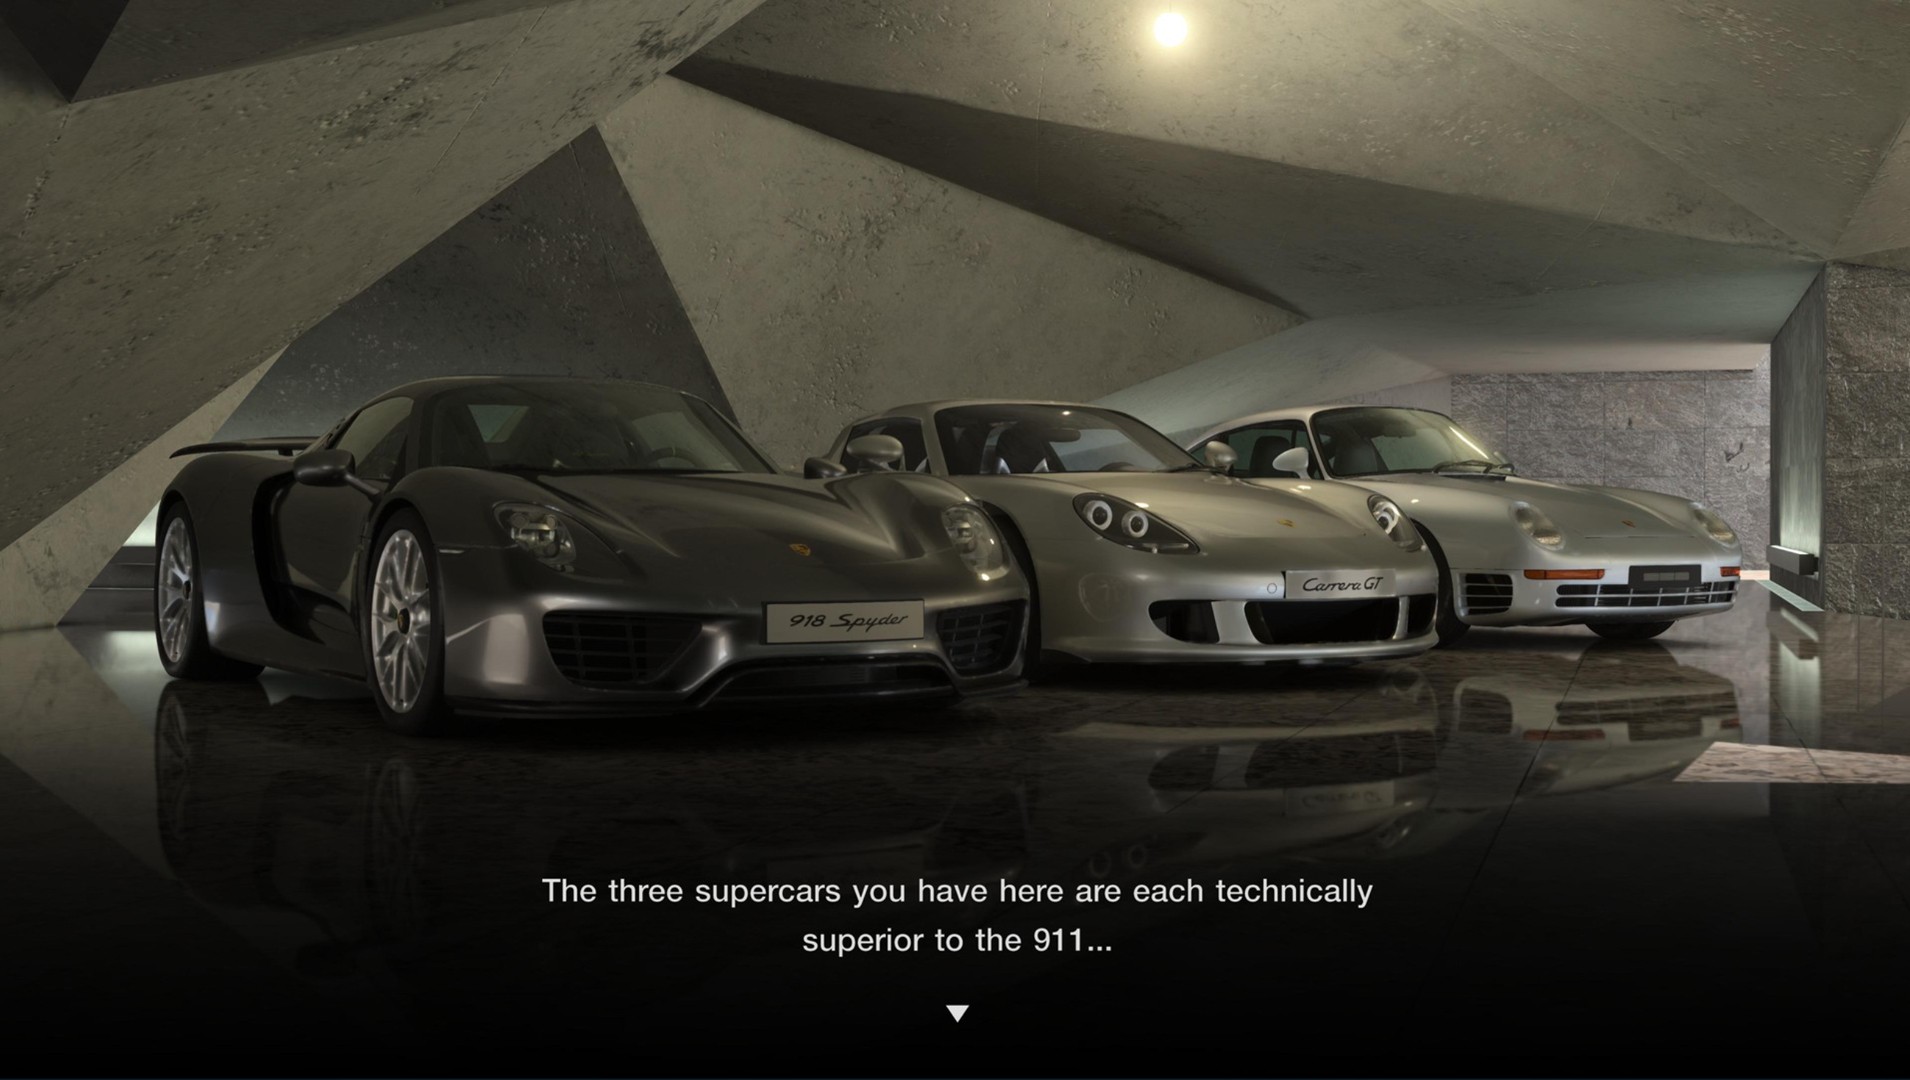 Gran Turismo 7 Update Next Week Will Add 3 New Cars - PlayStation